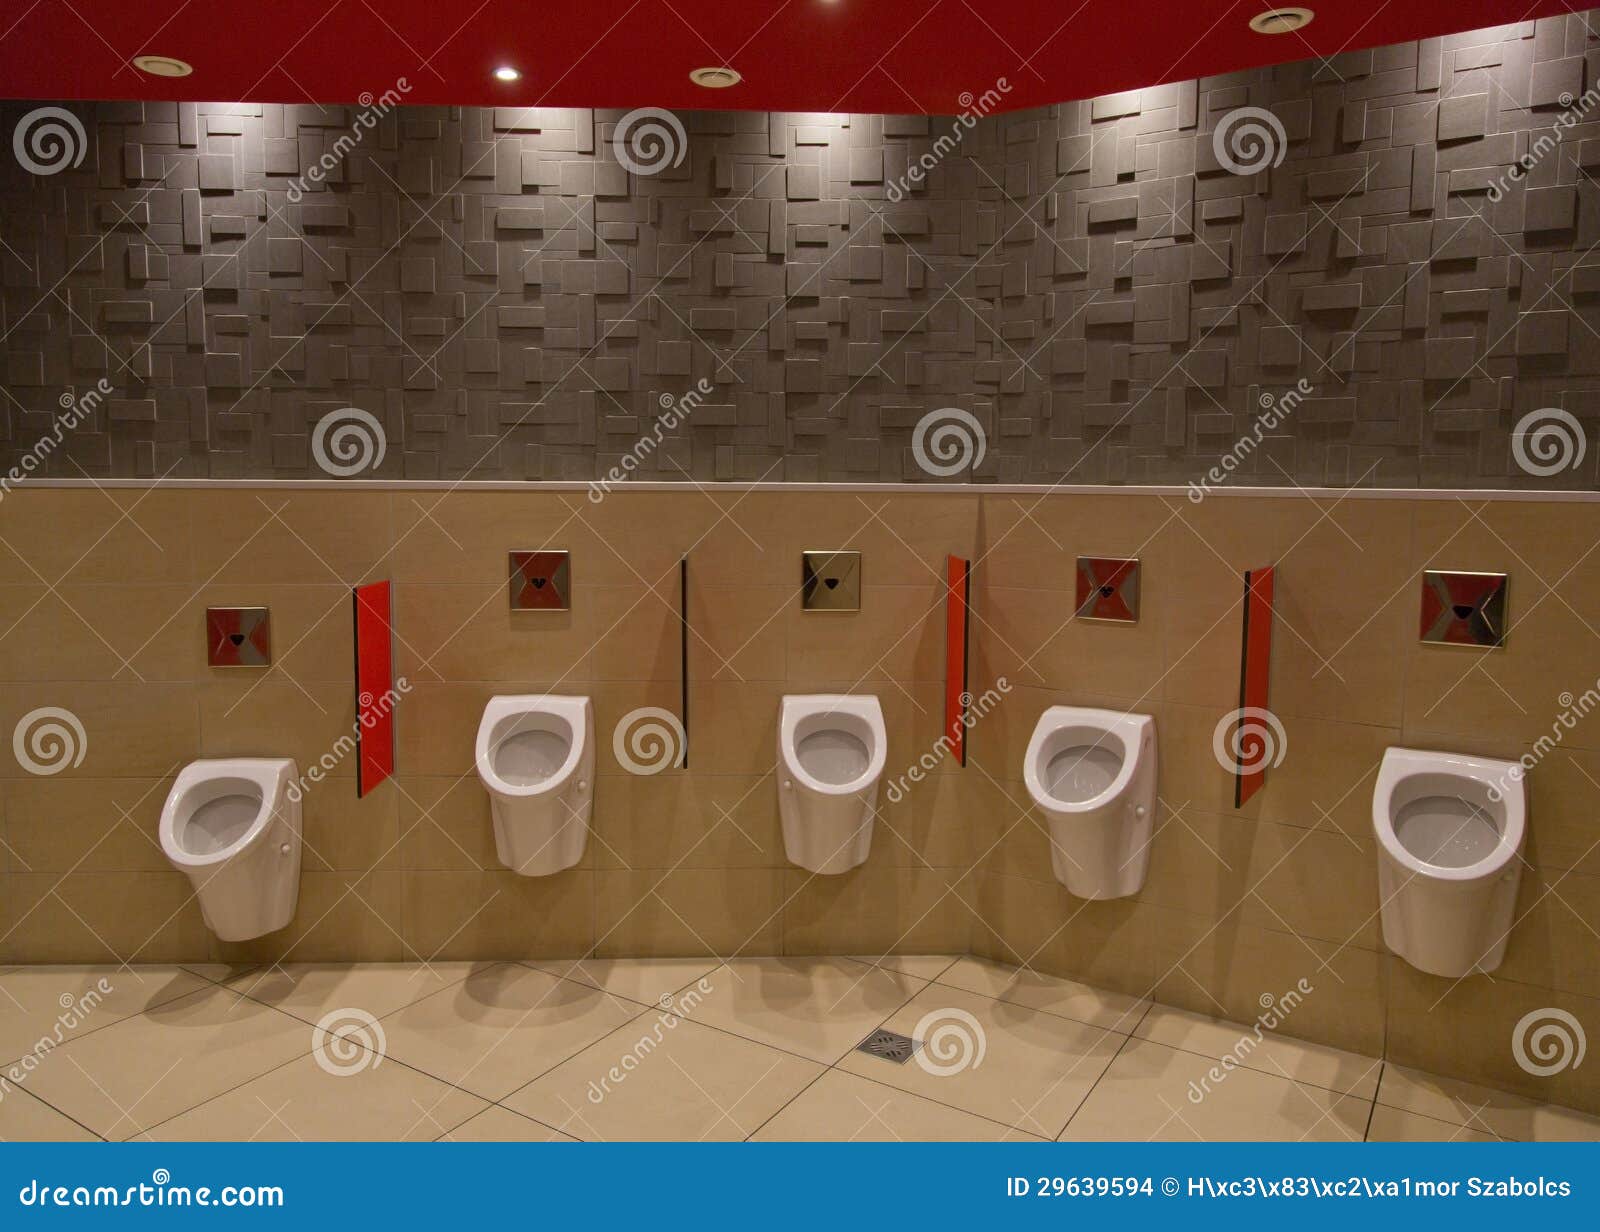 toilett with urinals